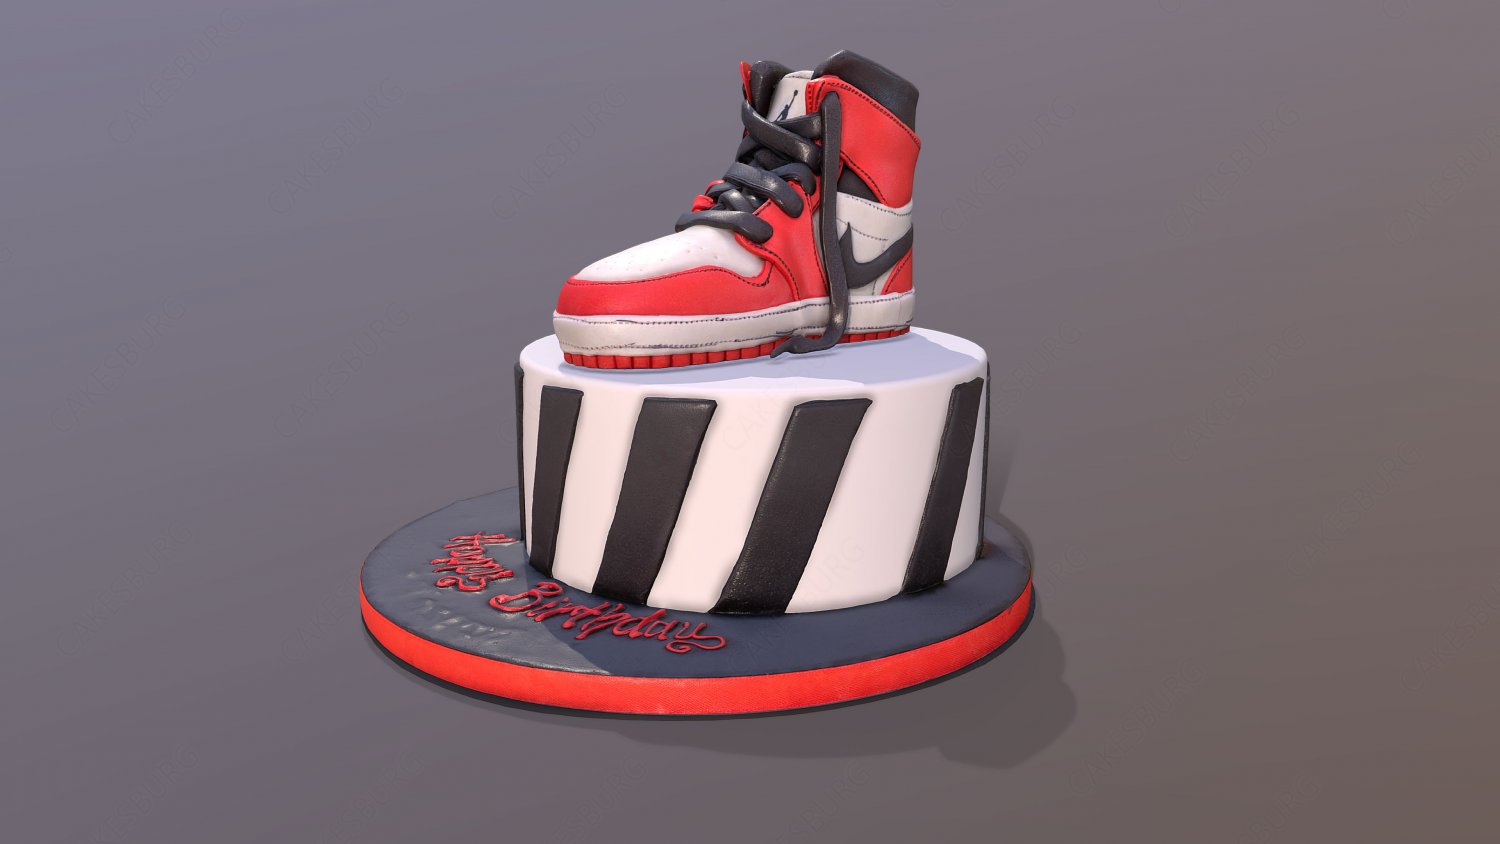 Nike Air Jordan Cake by cococakes on DeviantArt